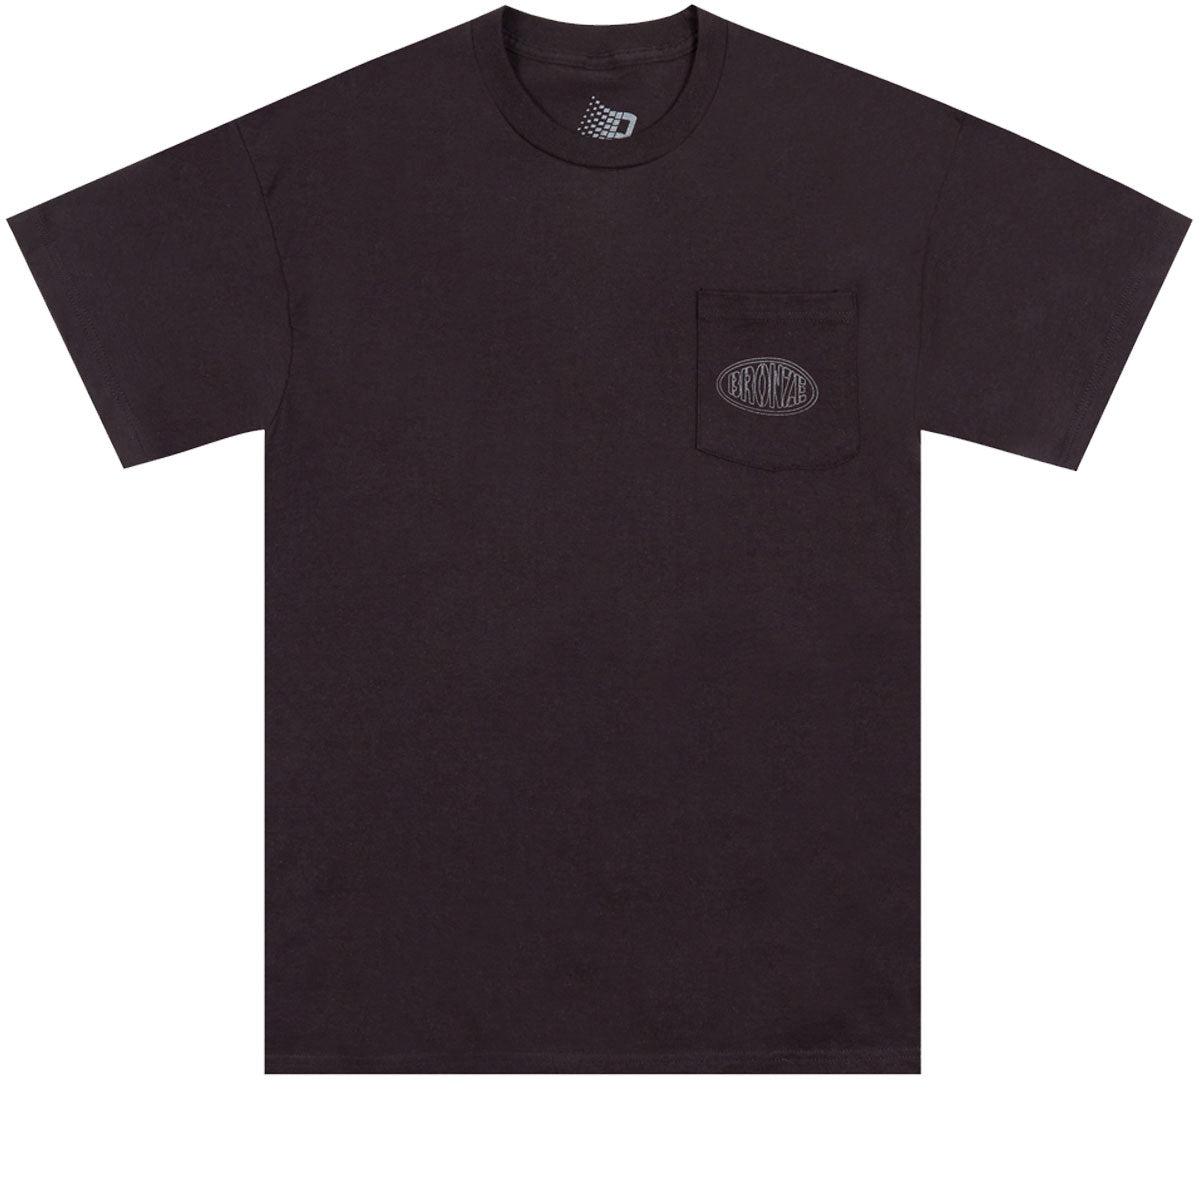 Bronze 56k Reflective Oval Pocket T-Shirt - Black image 1